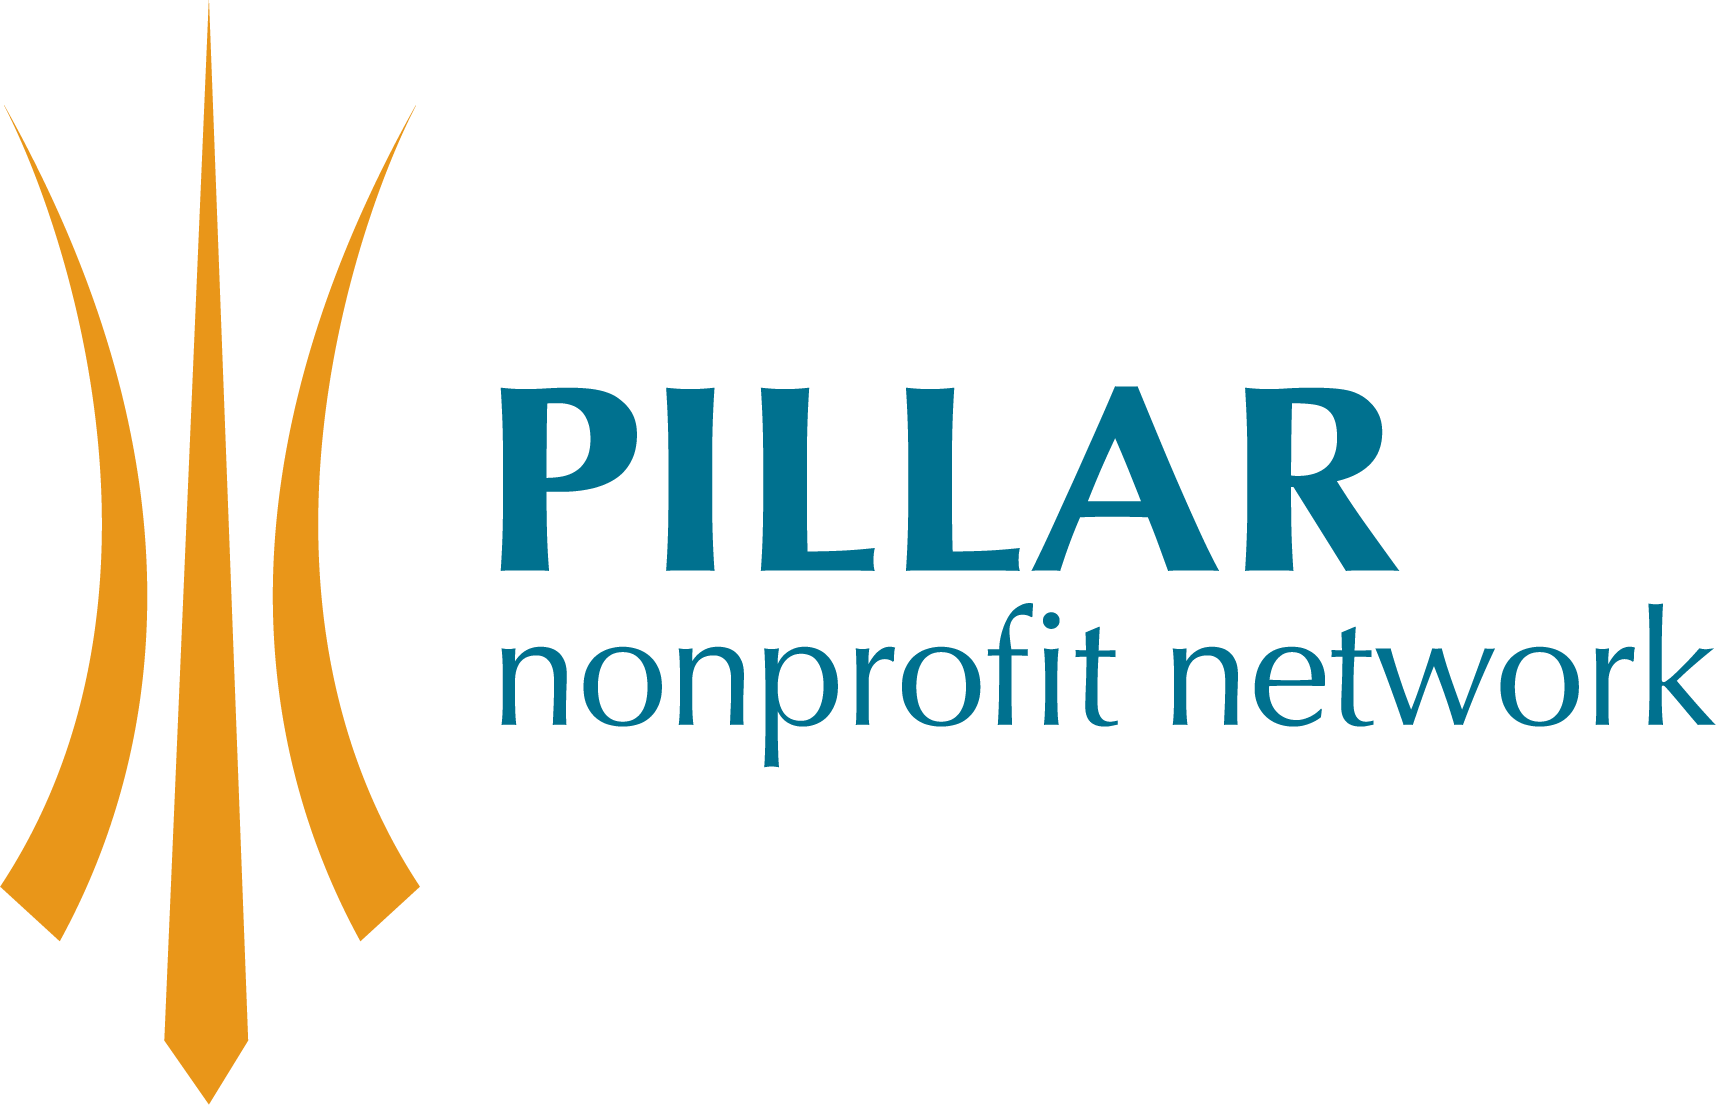 Pillar nonprofit network